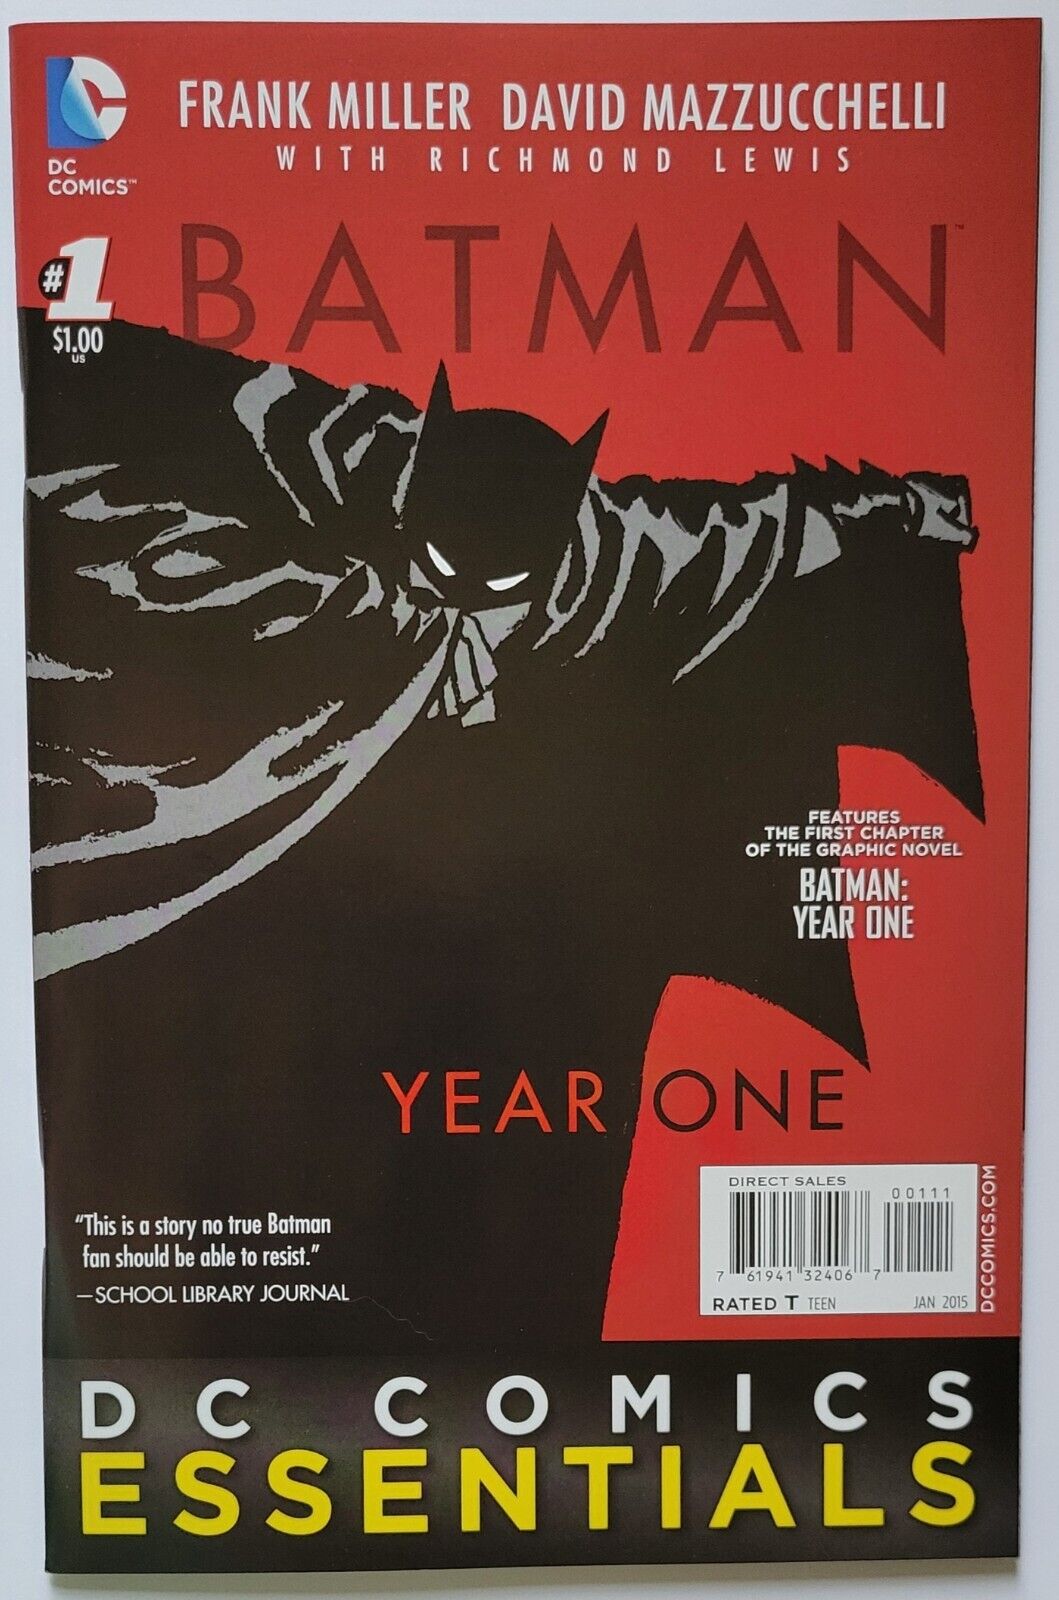 BATMAN YEAR ONE #1 DC ESSENTIALS 2015 FRANK MILLER NM